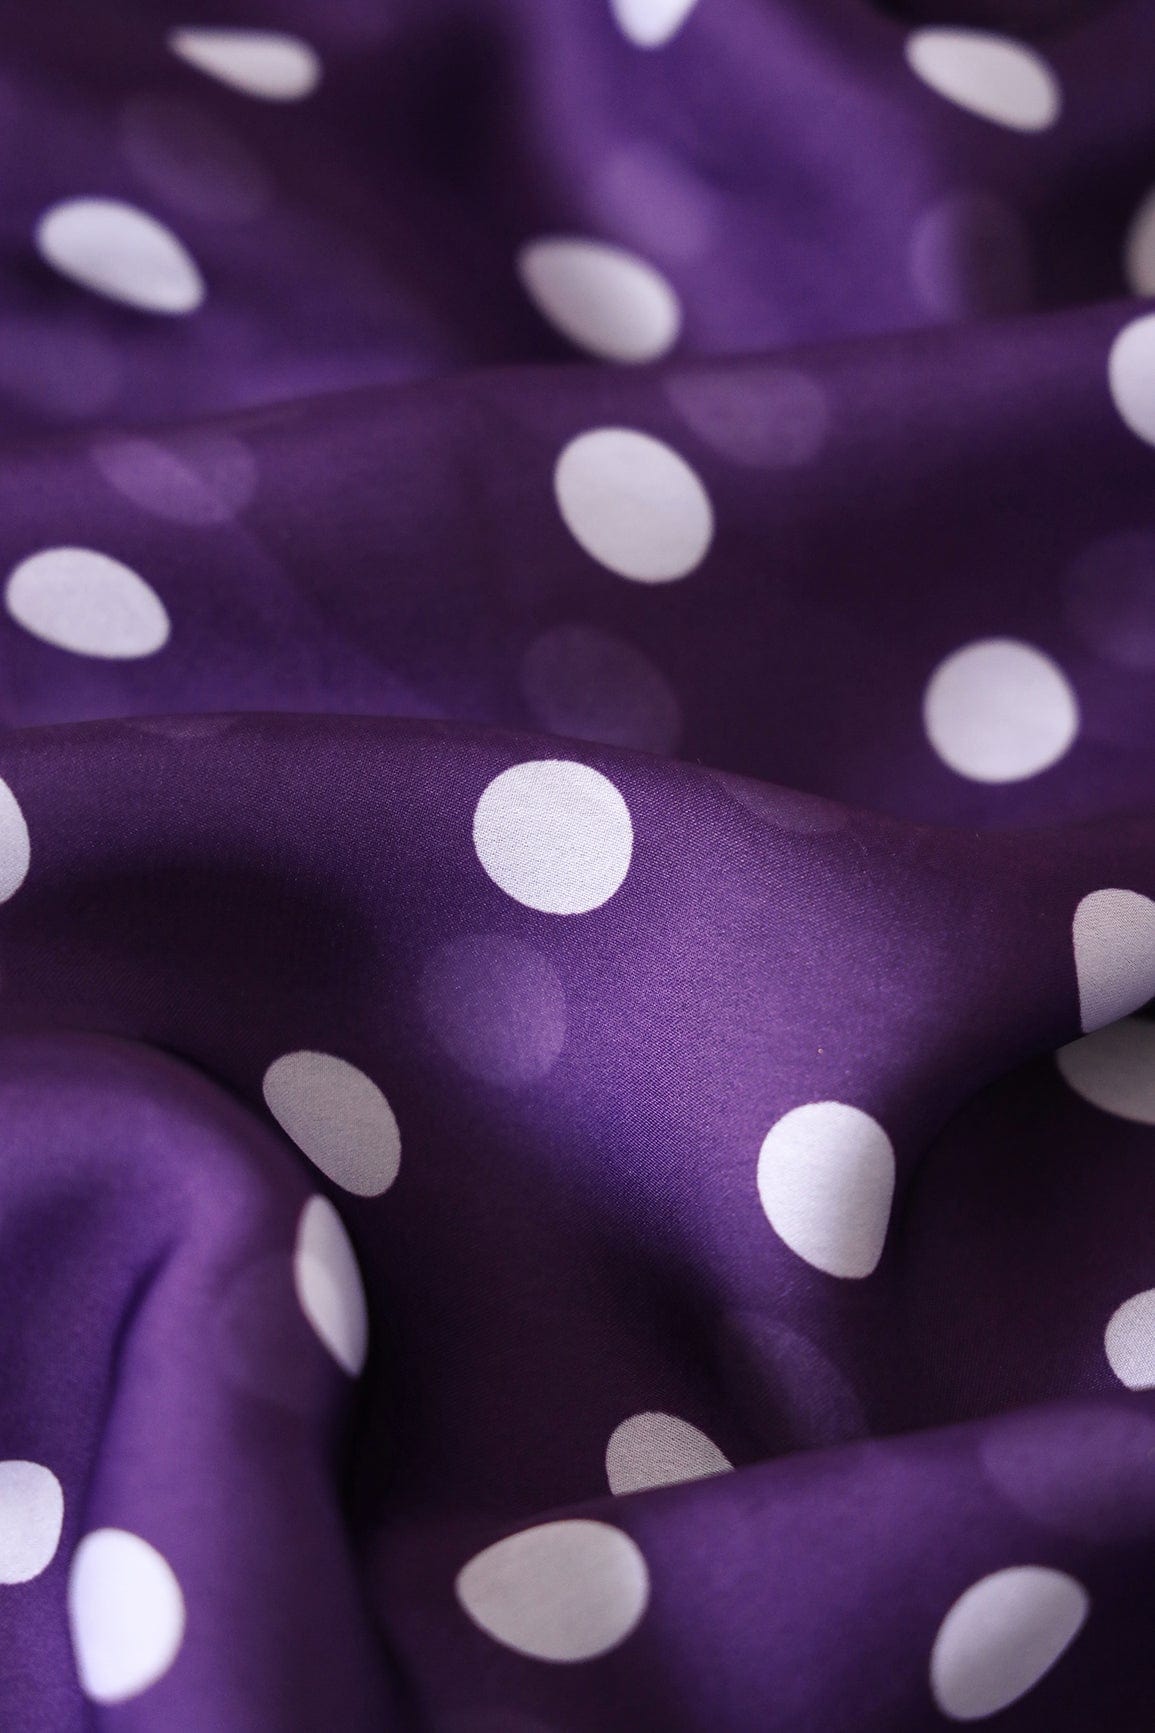 doeraa Prints Purple And White Polka Dots Pattern Digital Print On Georgette Satin Fabric